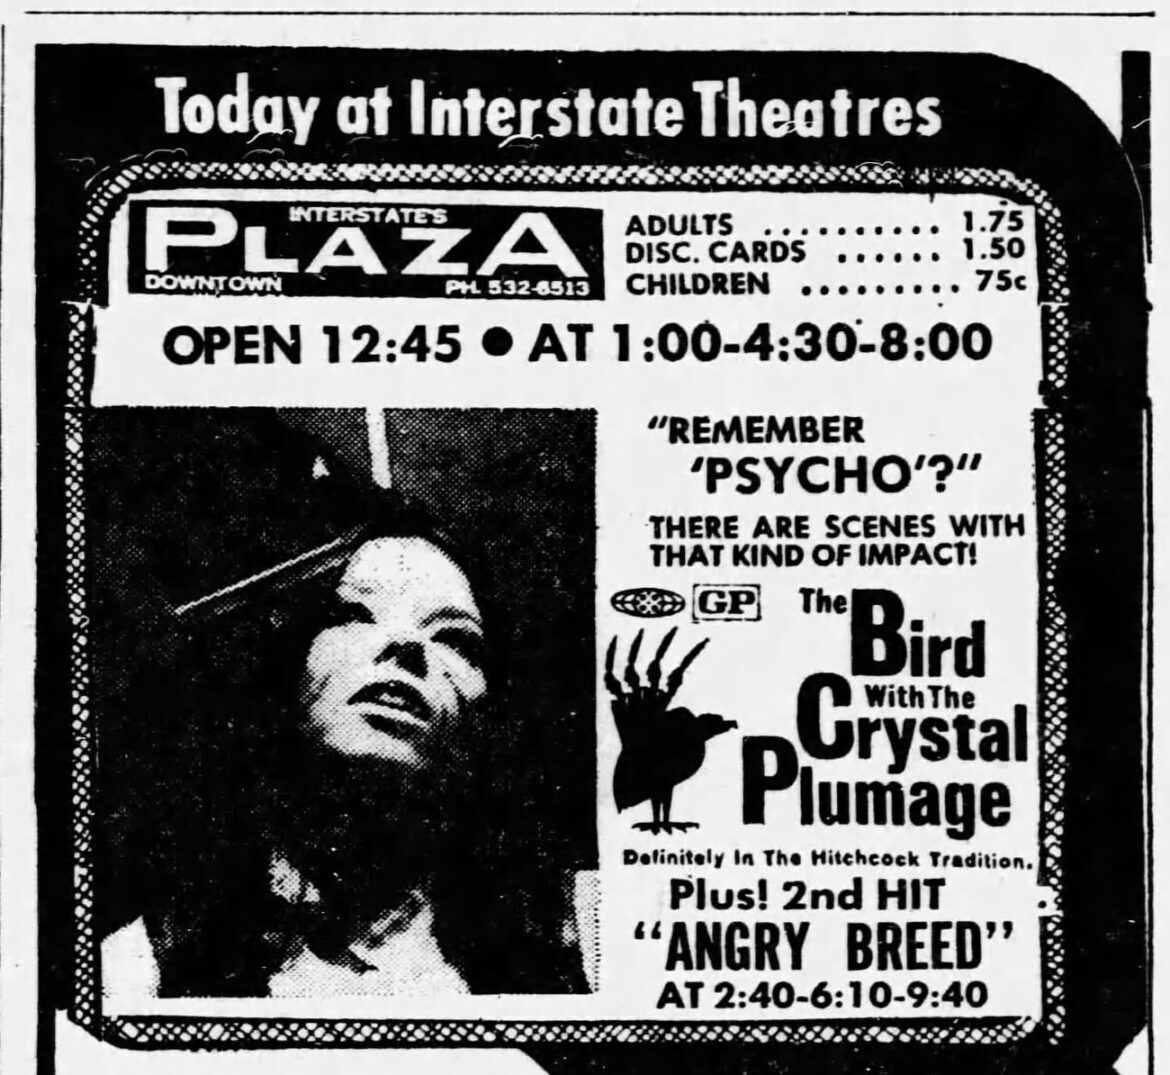 From: The El Paso Herald Post, Saturday, November 7, 1970.